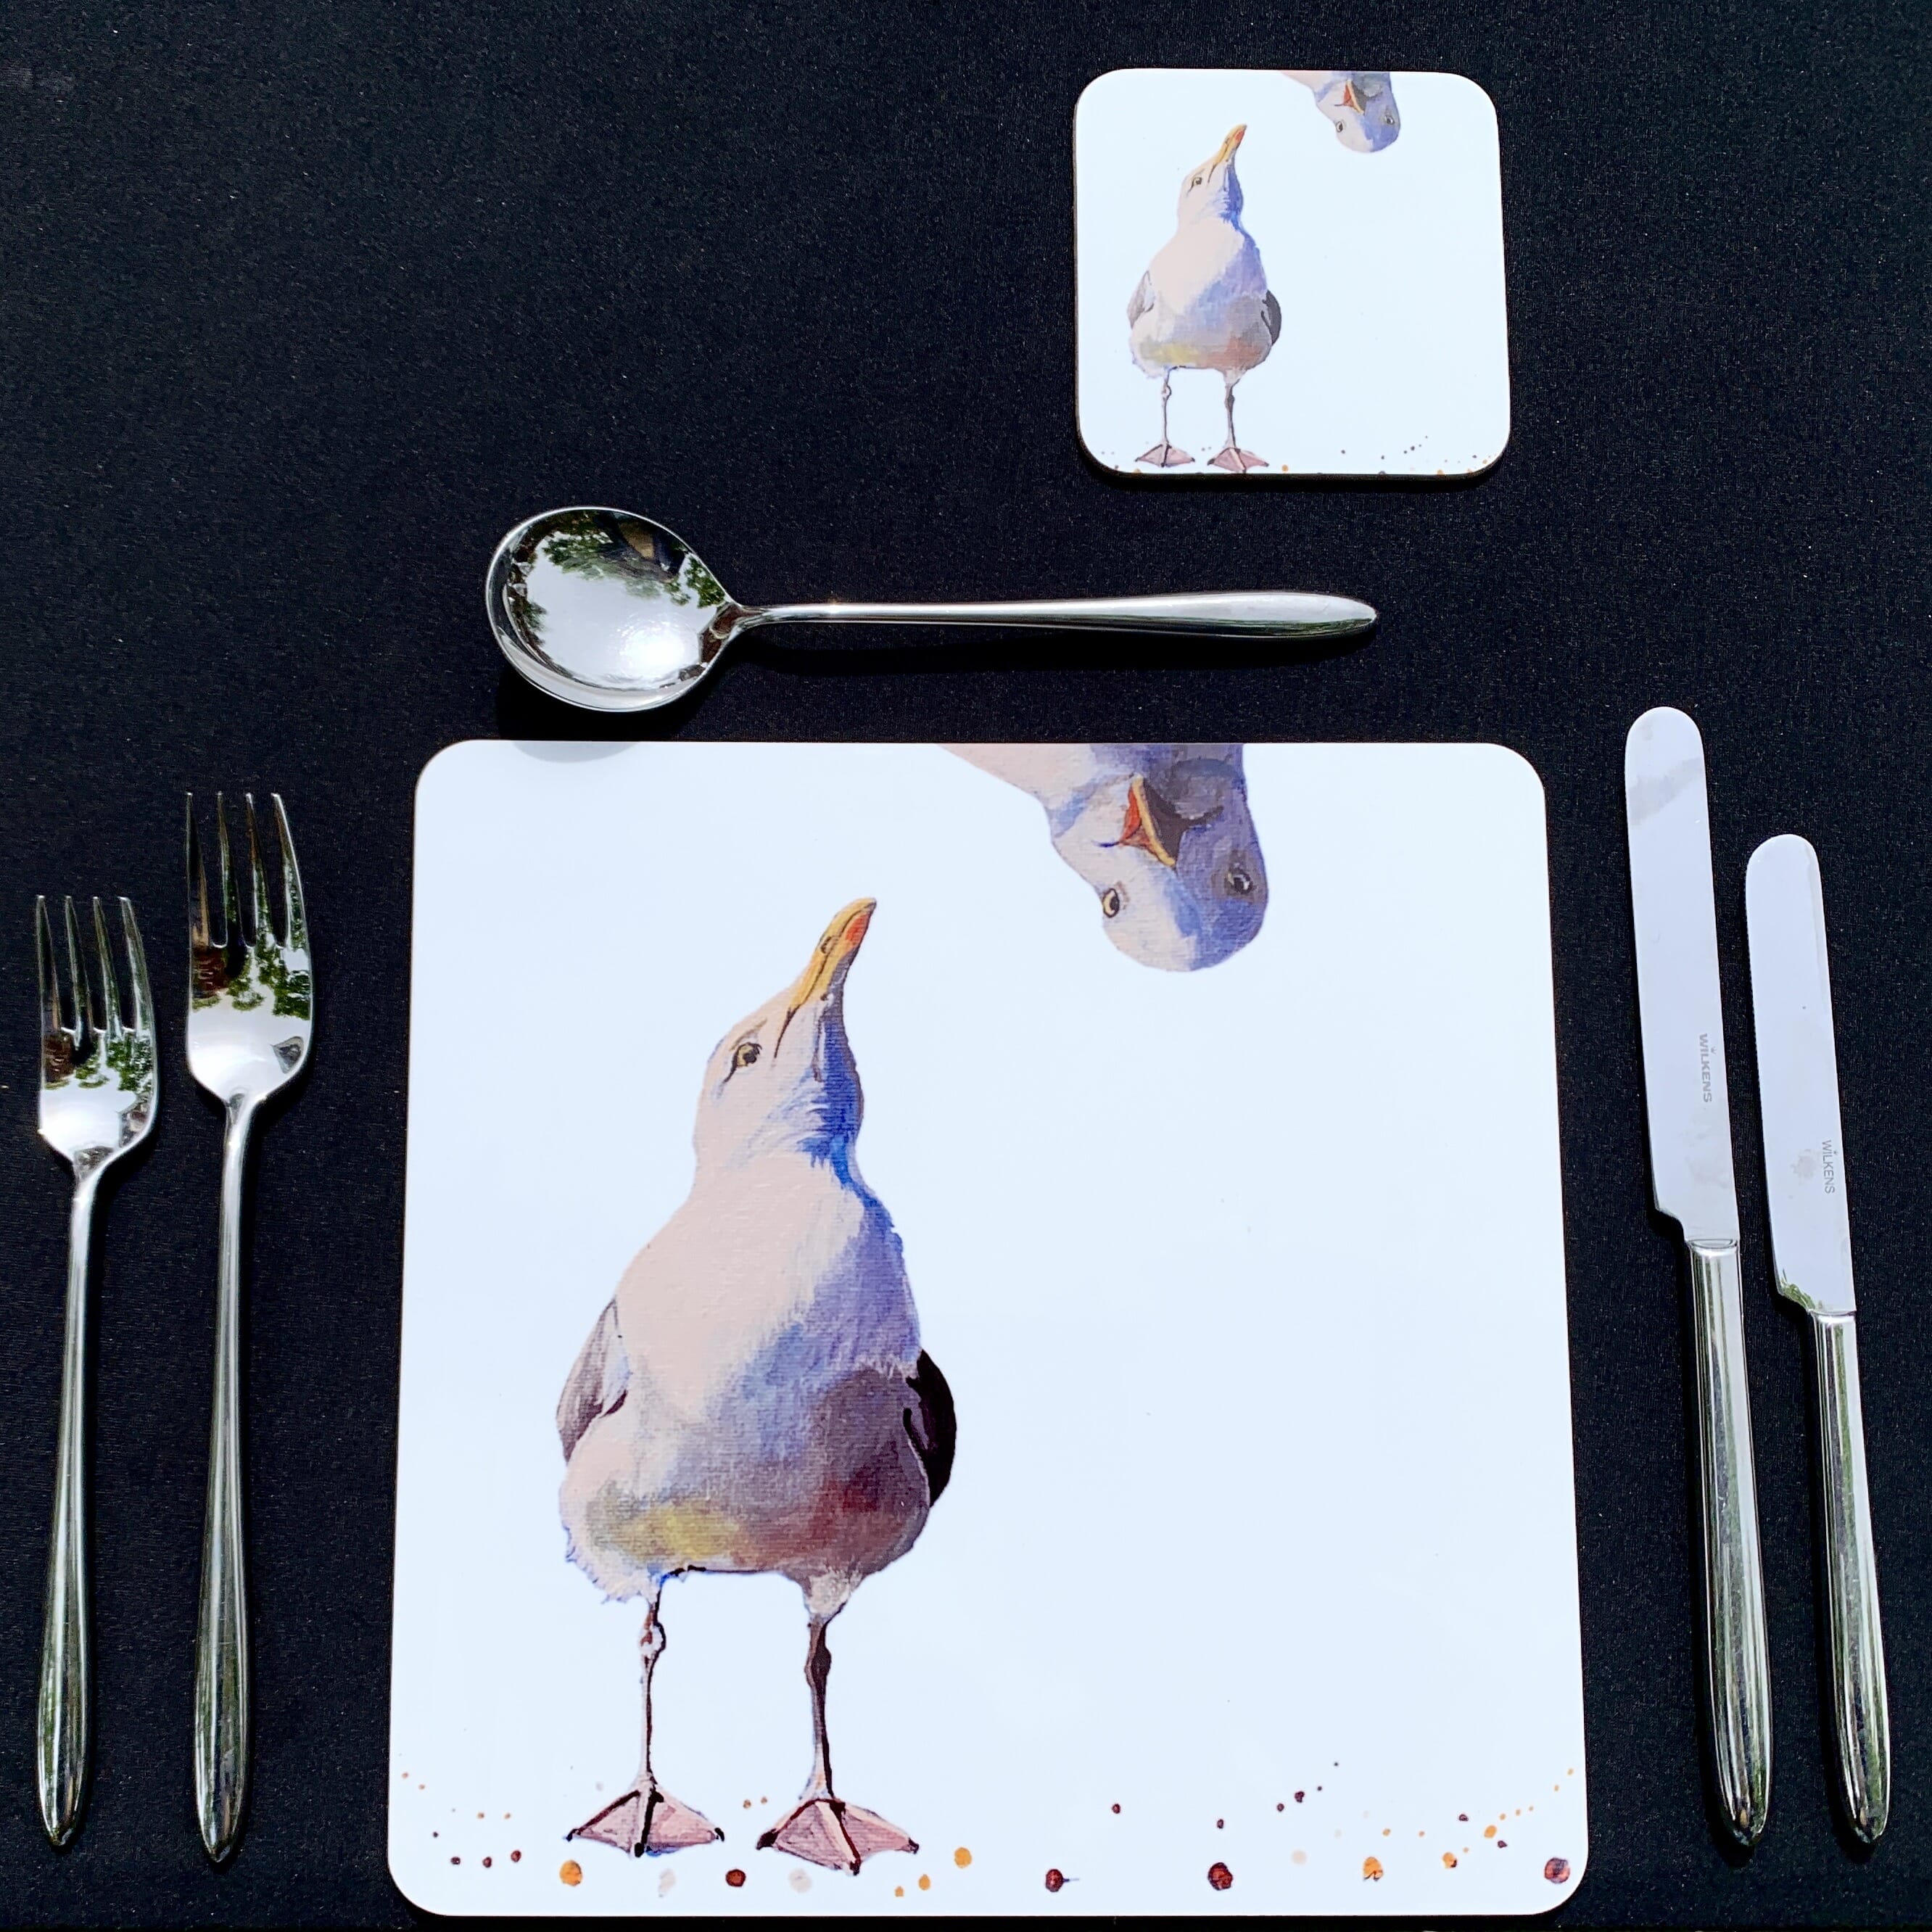 Handmade Seagull Art 23cm x 23cm placemat - Hard Backed, Glossy Finish 